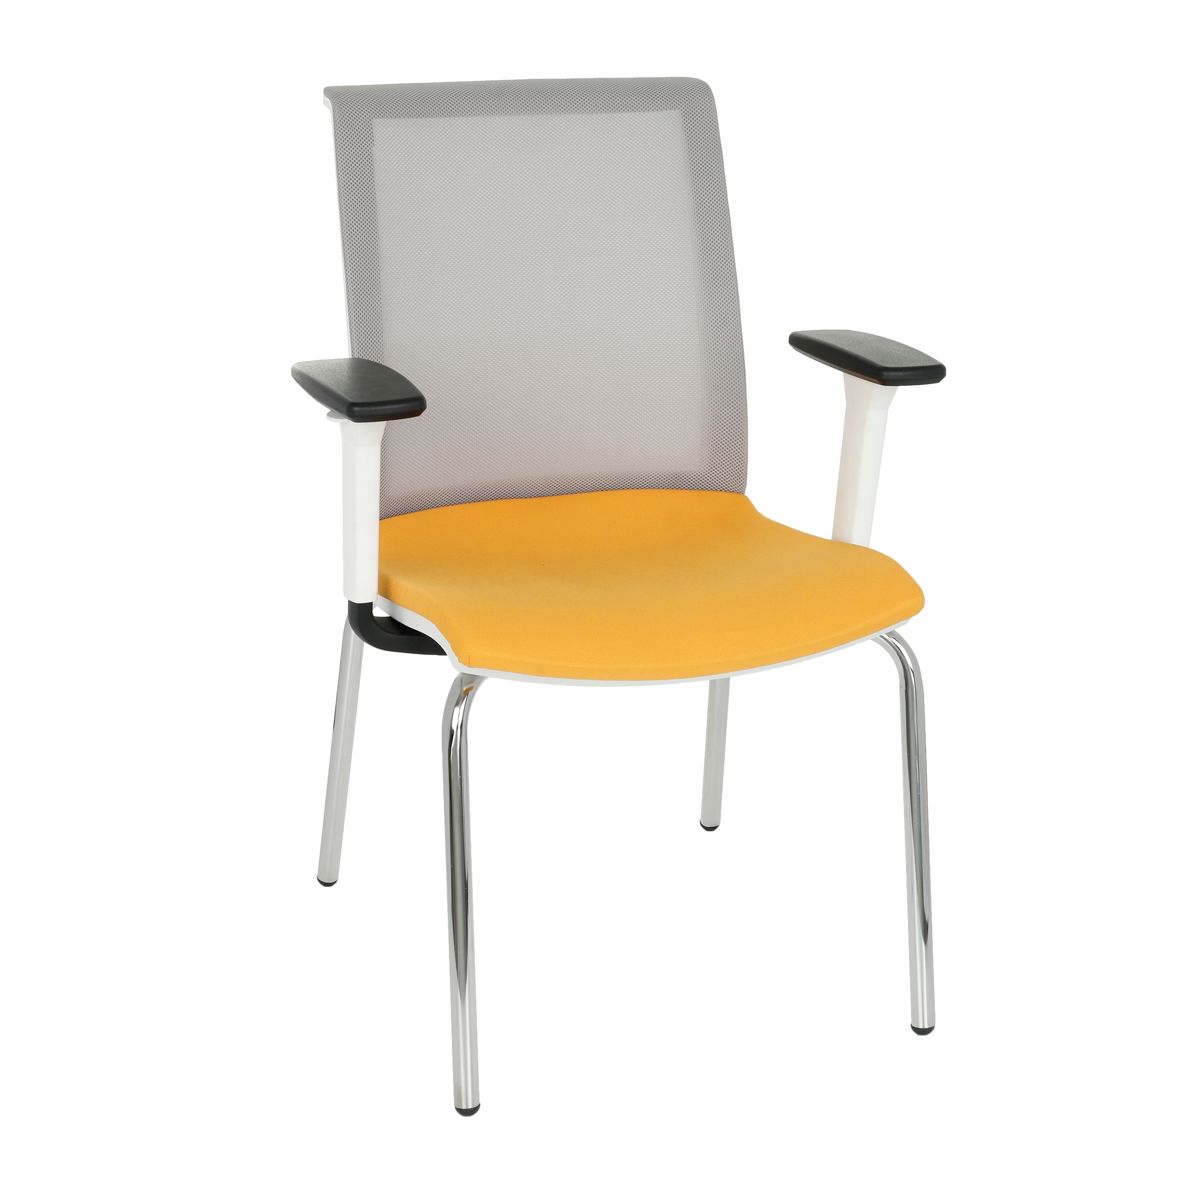 NABBI Libon 4L WS R1 konferenčná stolička s podrúčkami žltá / sivá / biela / chróm - nabbi.sk